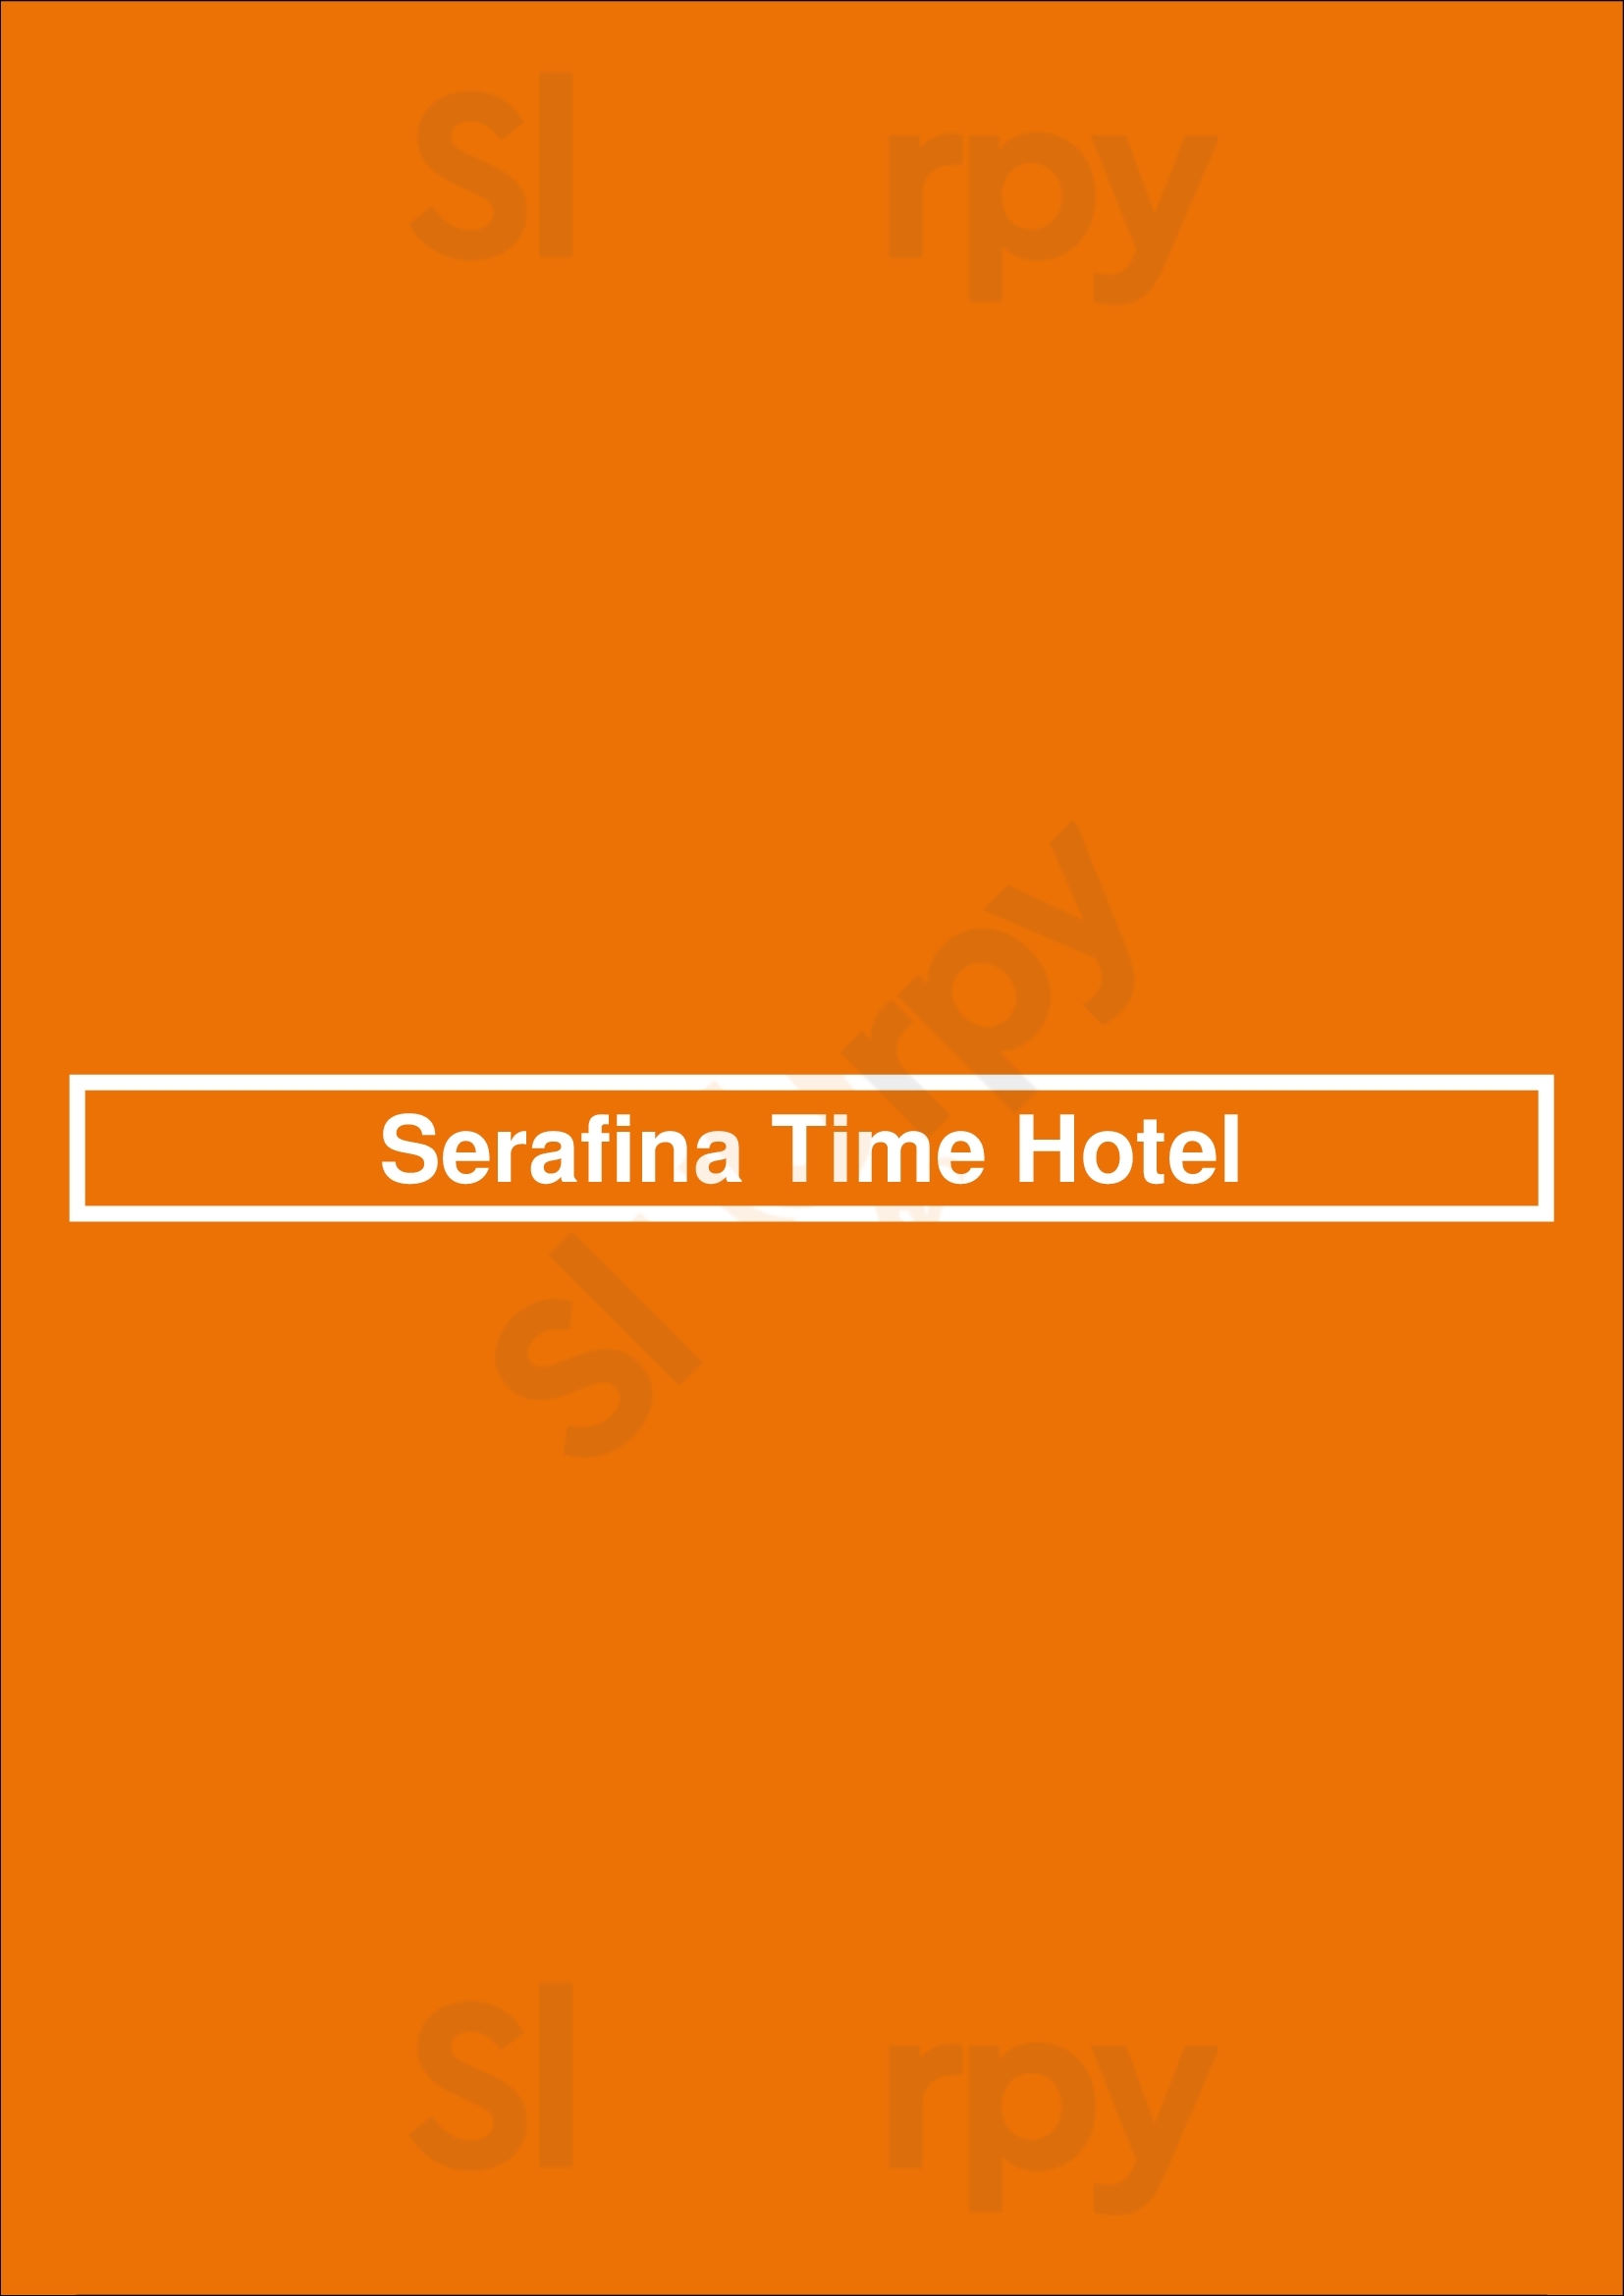 Serafina Time Hotel New York City Menu - 1